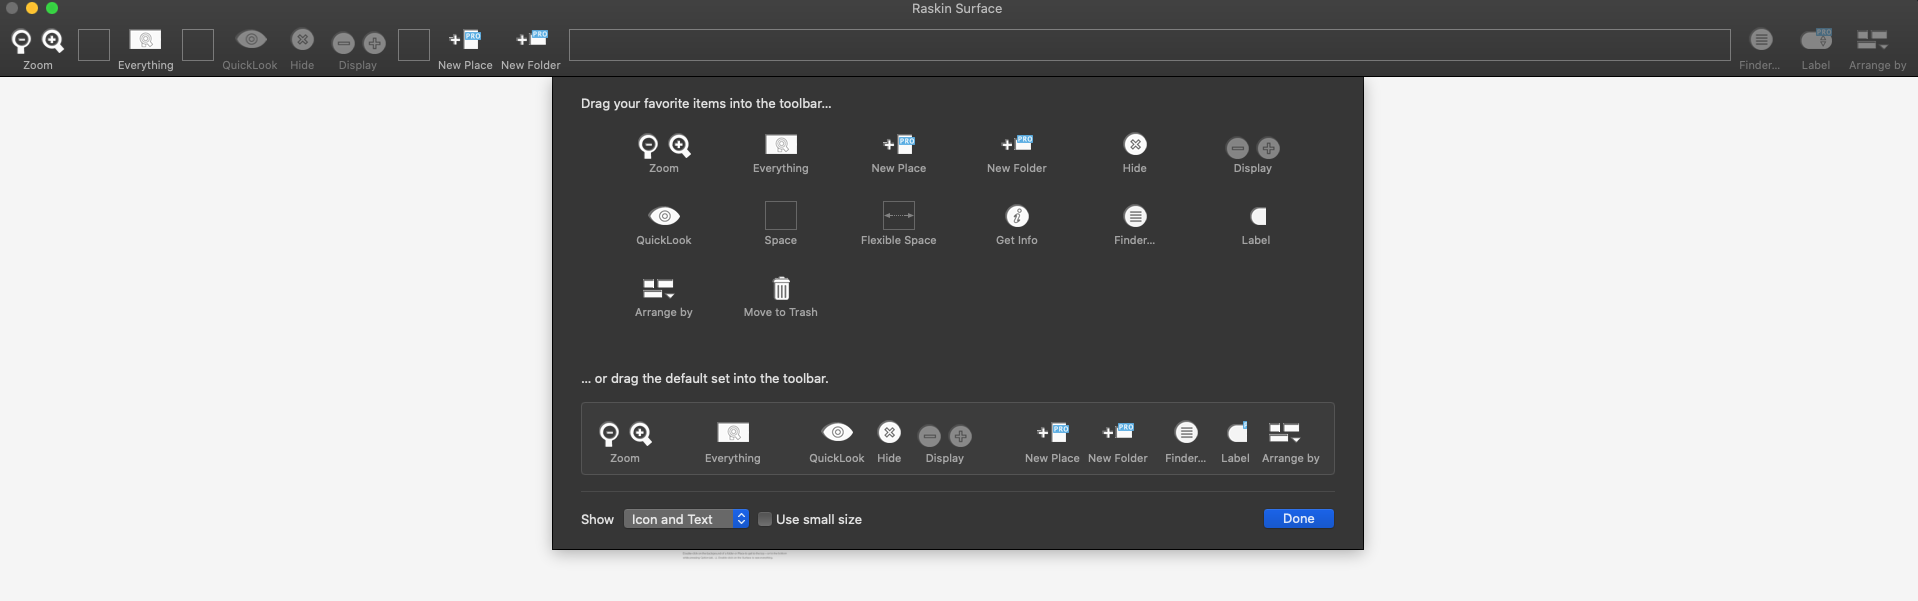 Raskin 2.0 : Toolbar options window